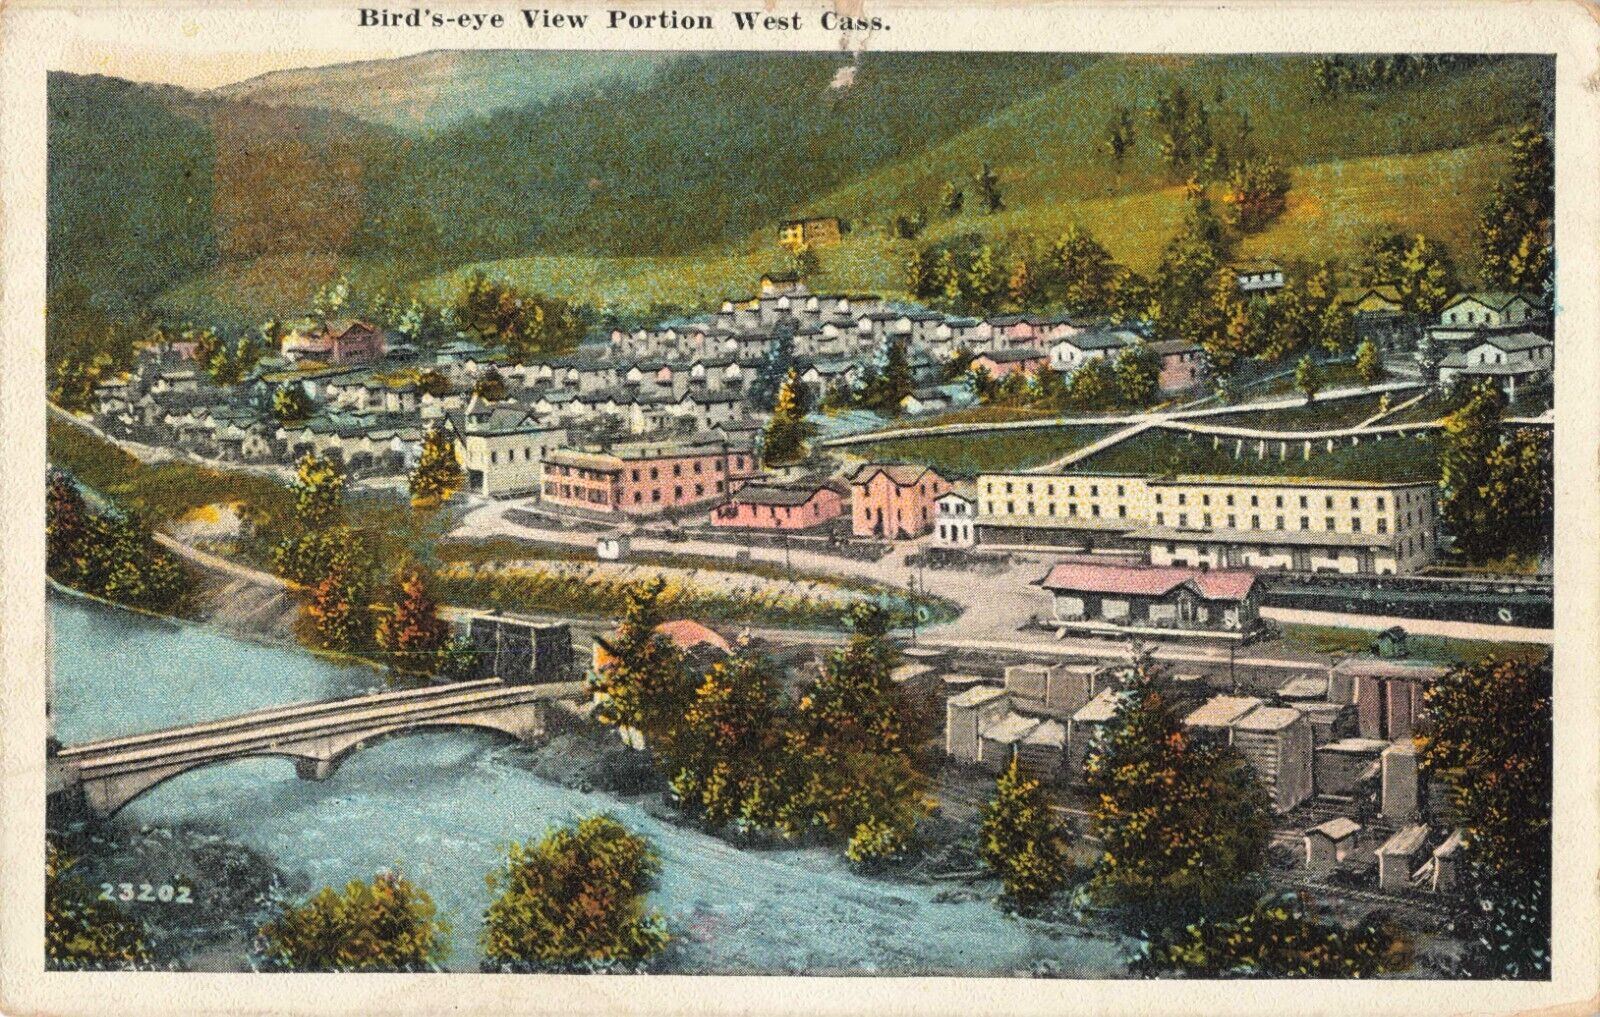 Birdseye View Portion of West Cass West Virginia WV c1920 Postcard